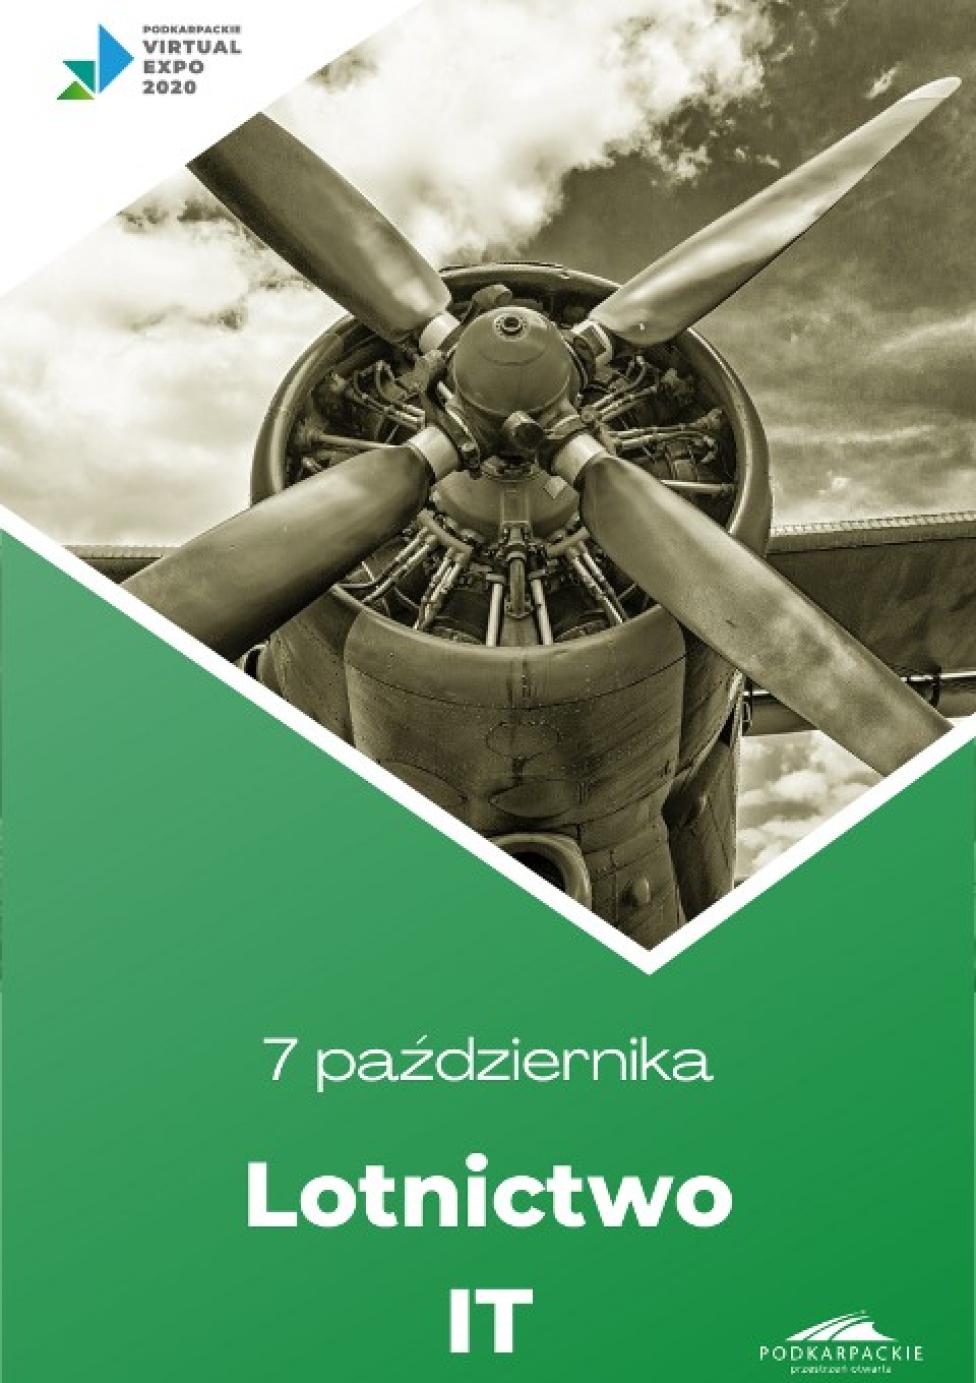 Podkarpackie Virtual Expo 2020 - lotnictwo (fot. virtualexpo.podkarpackie.pl)